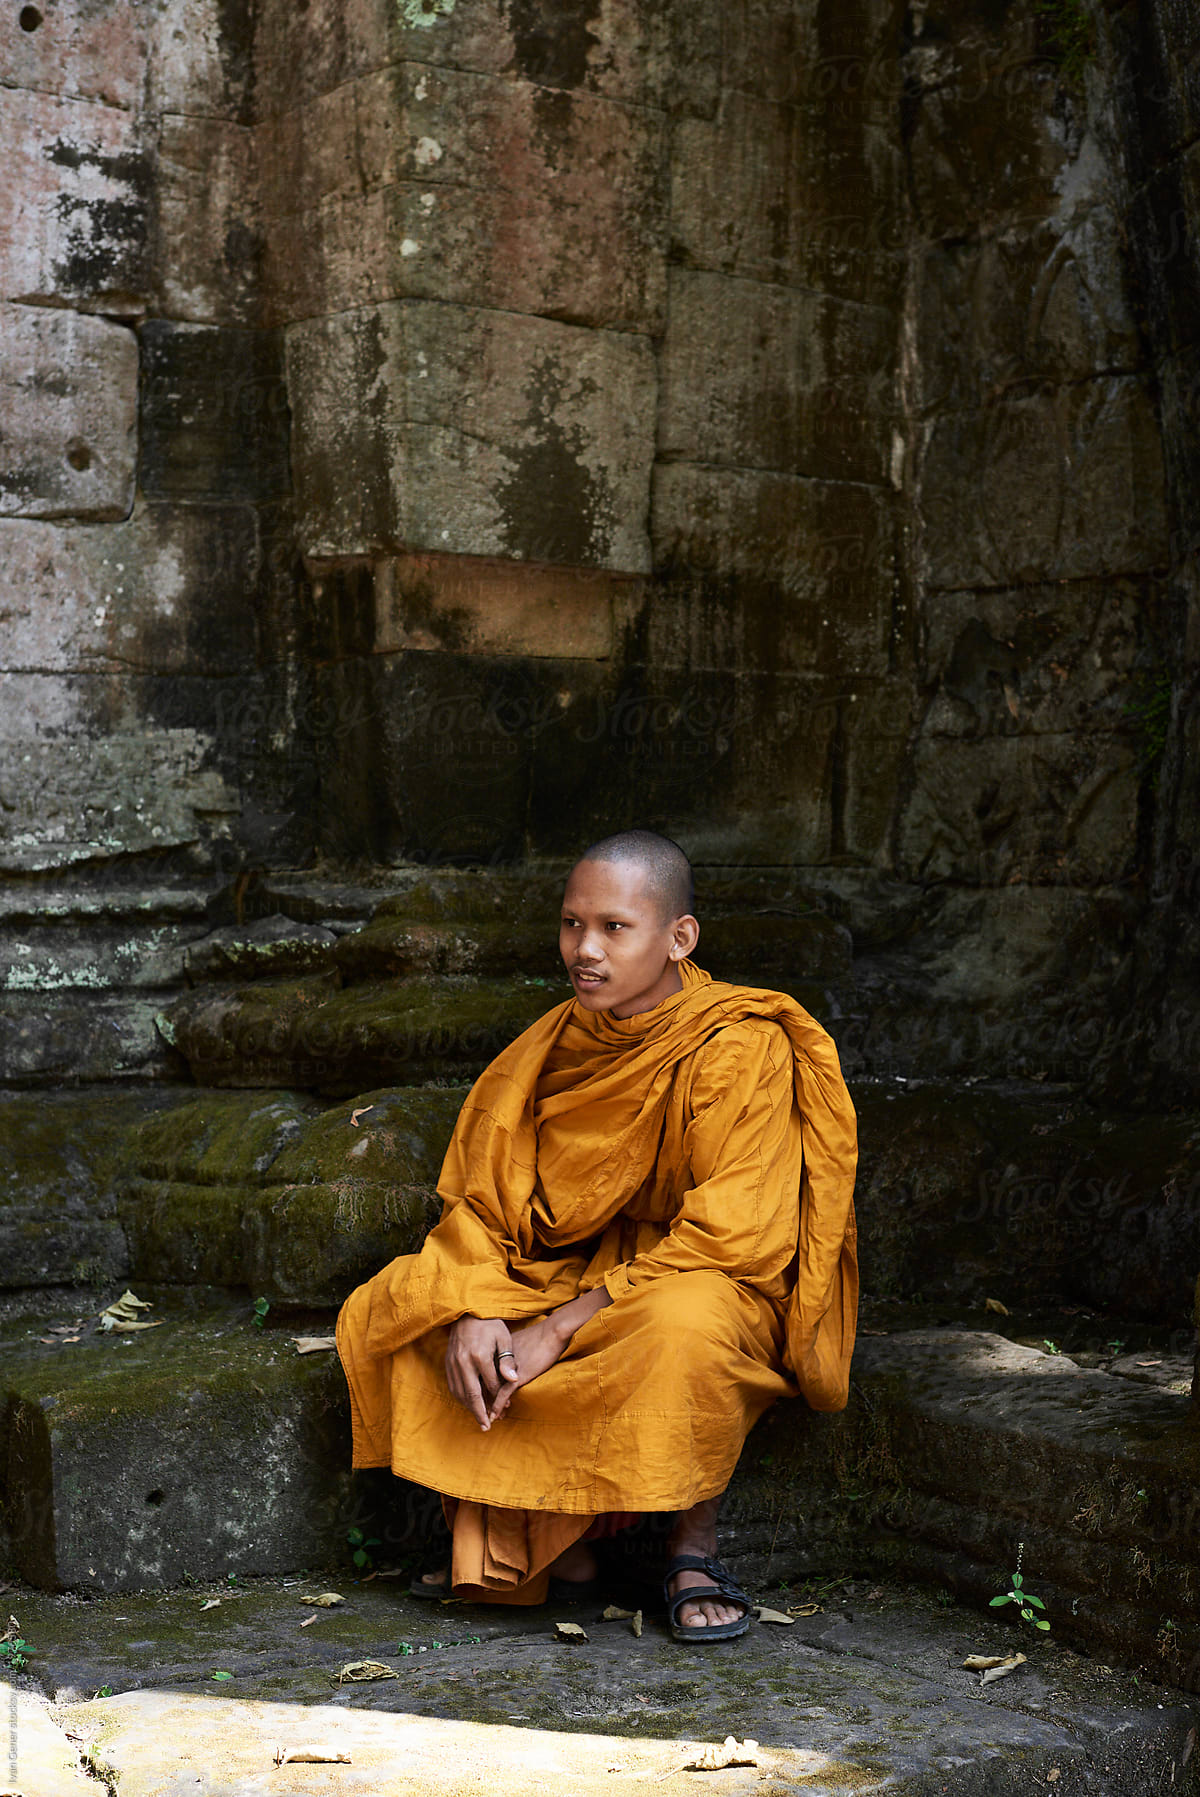 Monk in orange clothes sitting